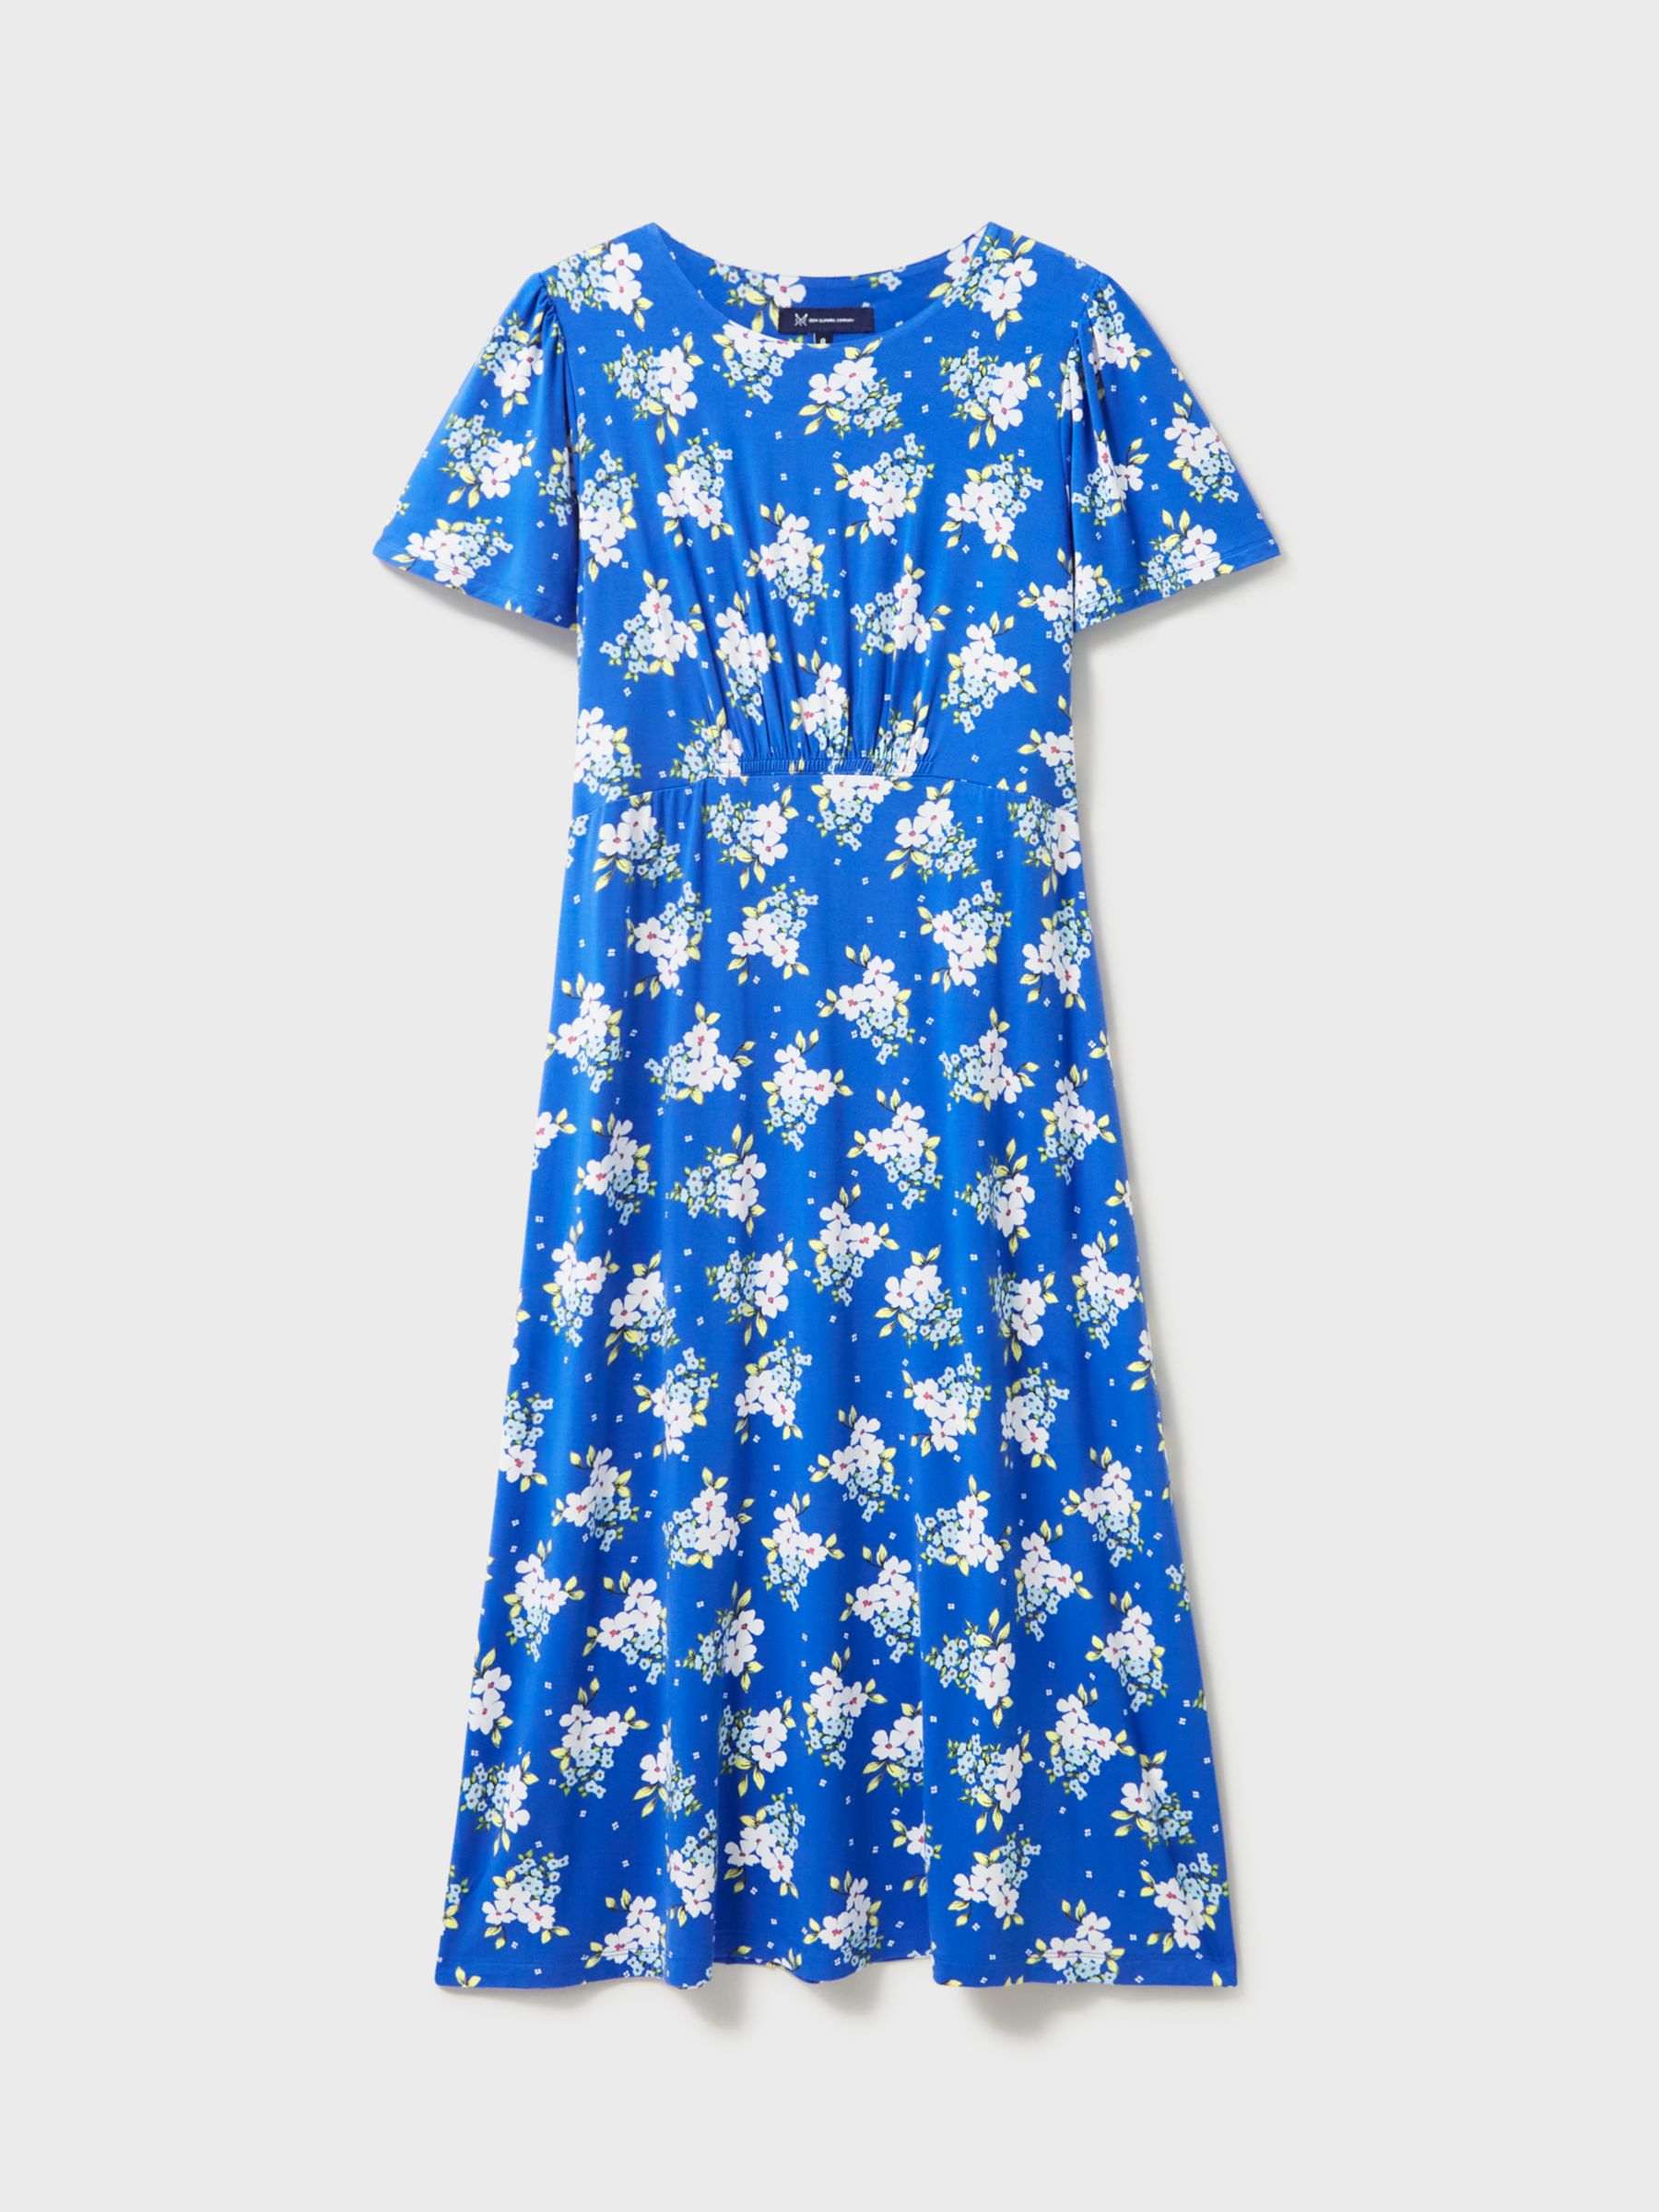 Buy Crew Clothing Jenna Floral Dress, Bright Blue Online at johnlewis.com